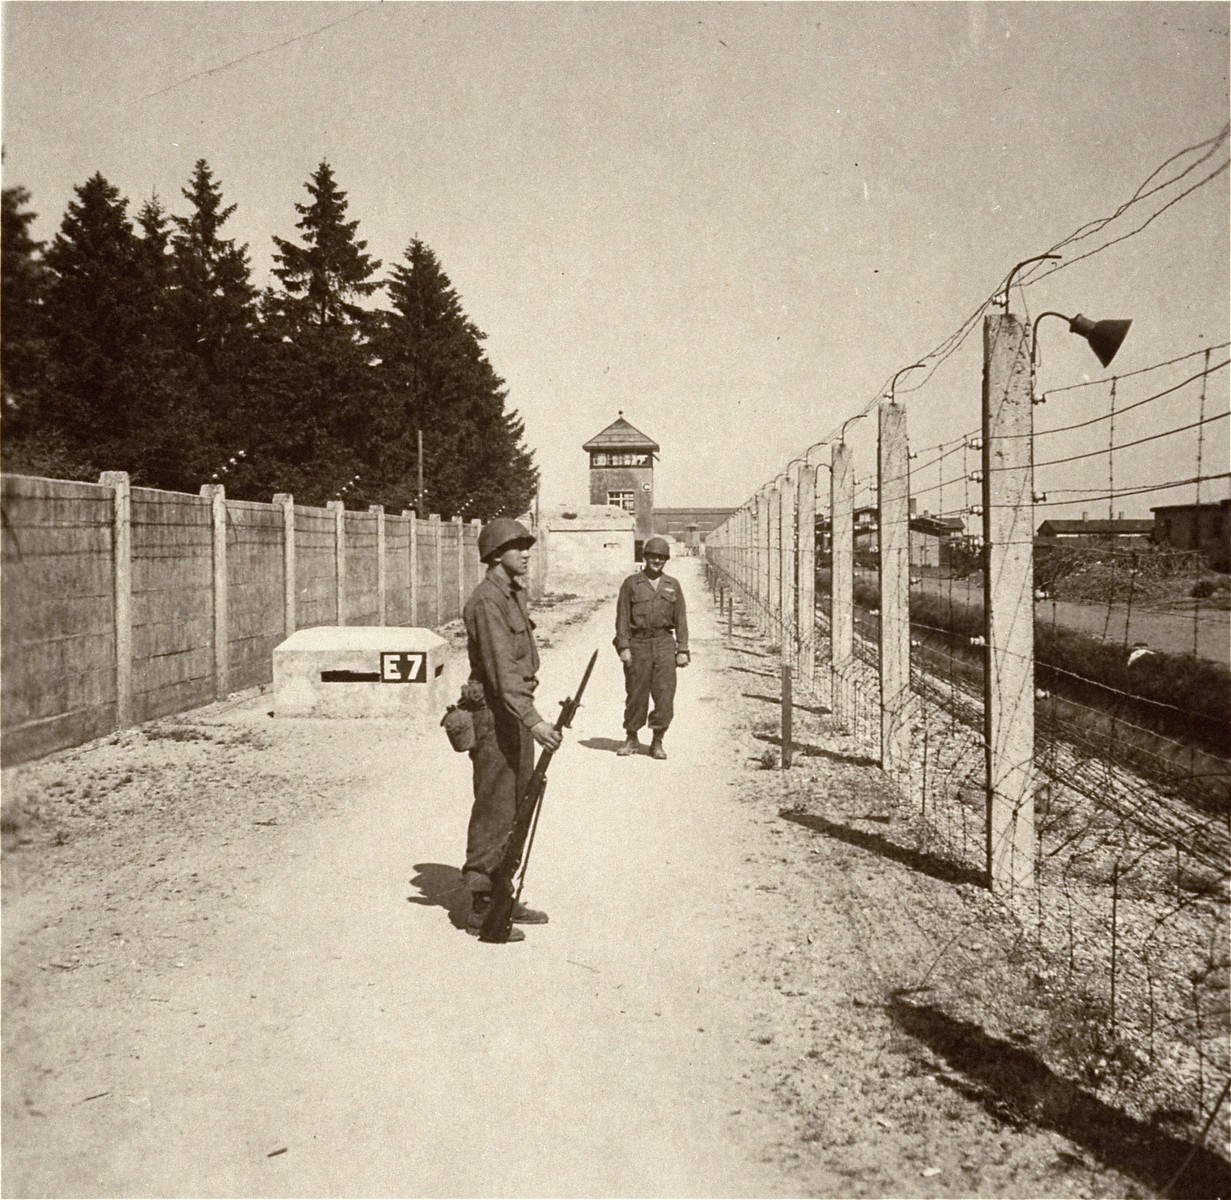 American liberators stand guard at Dachau.